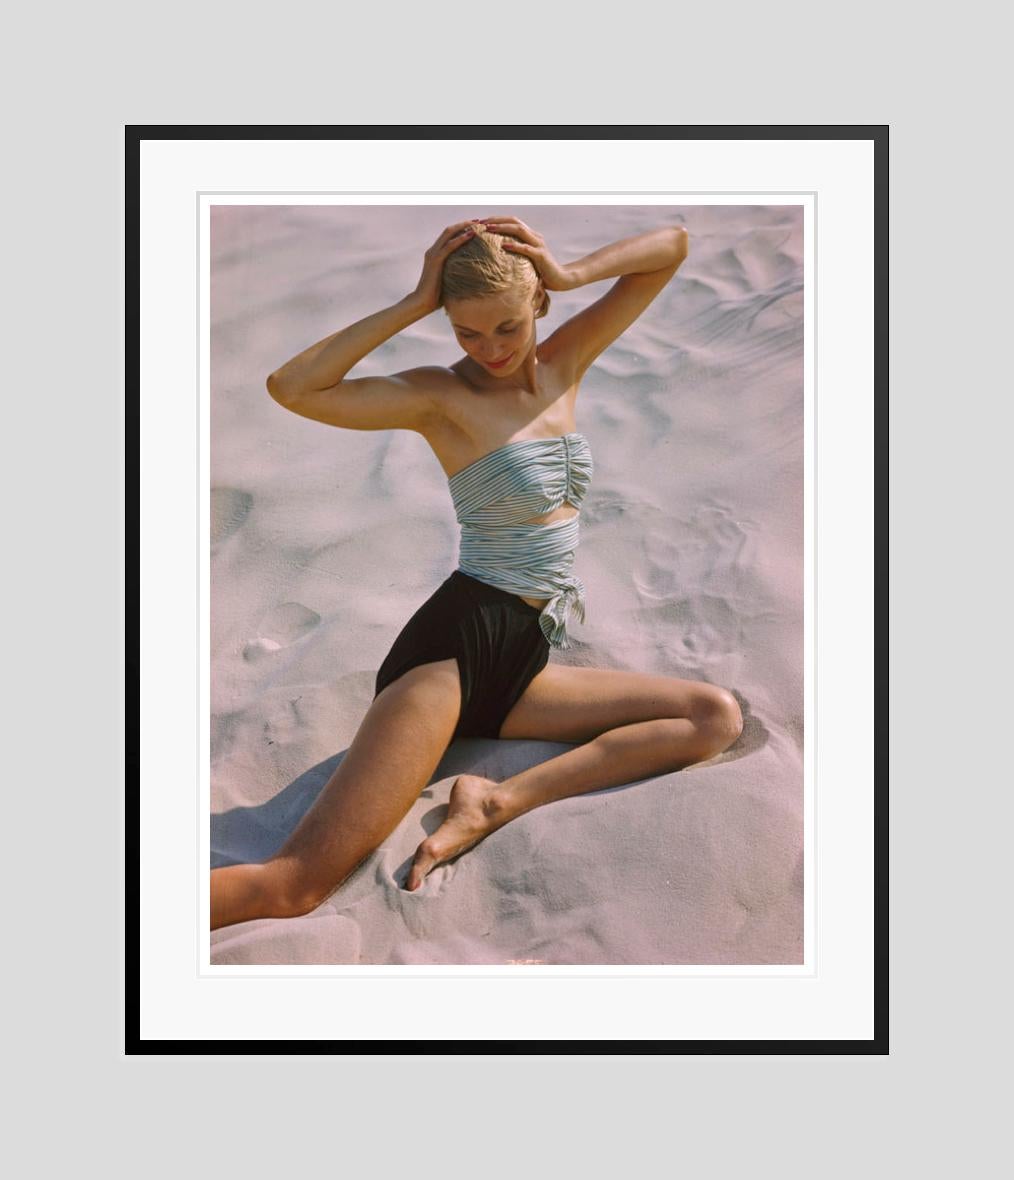 Mädchen am Strand 

1948

Strandmode-Shooting

von Toni Frissell

40 x 30